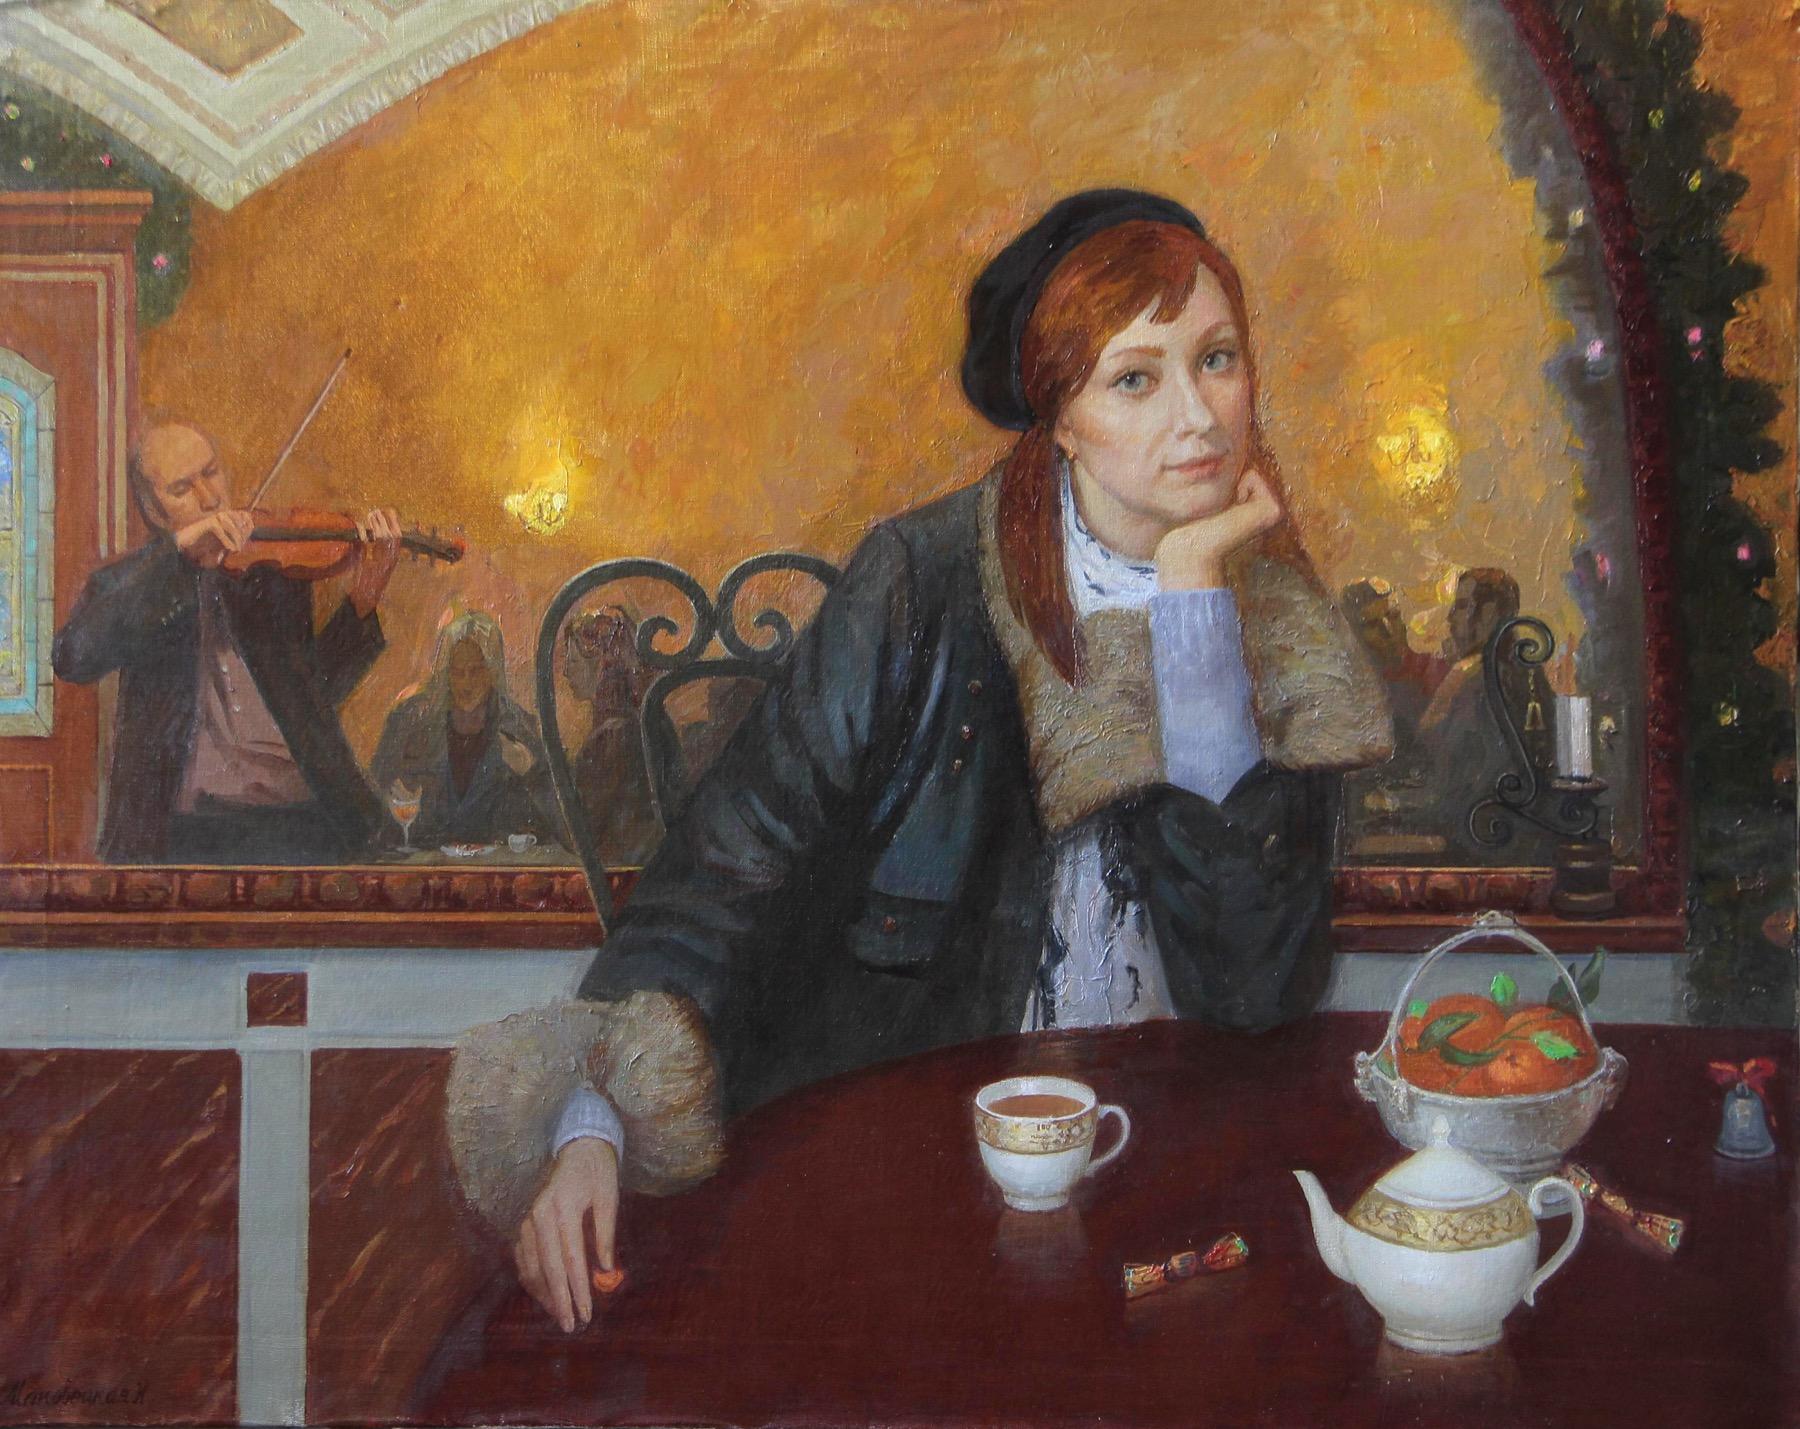 Cafe. Original modern art painting